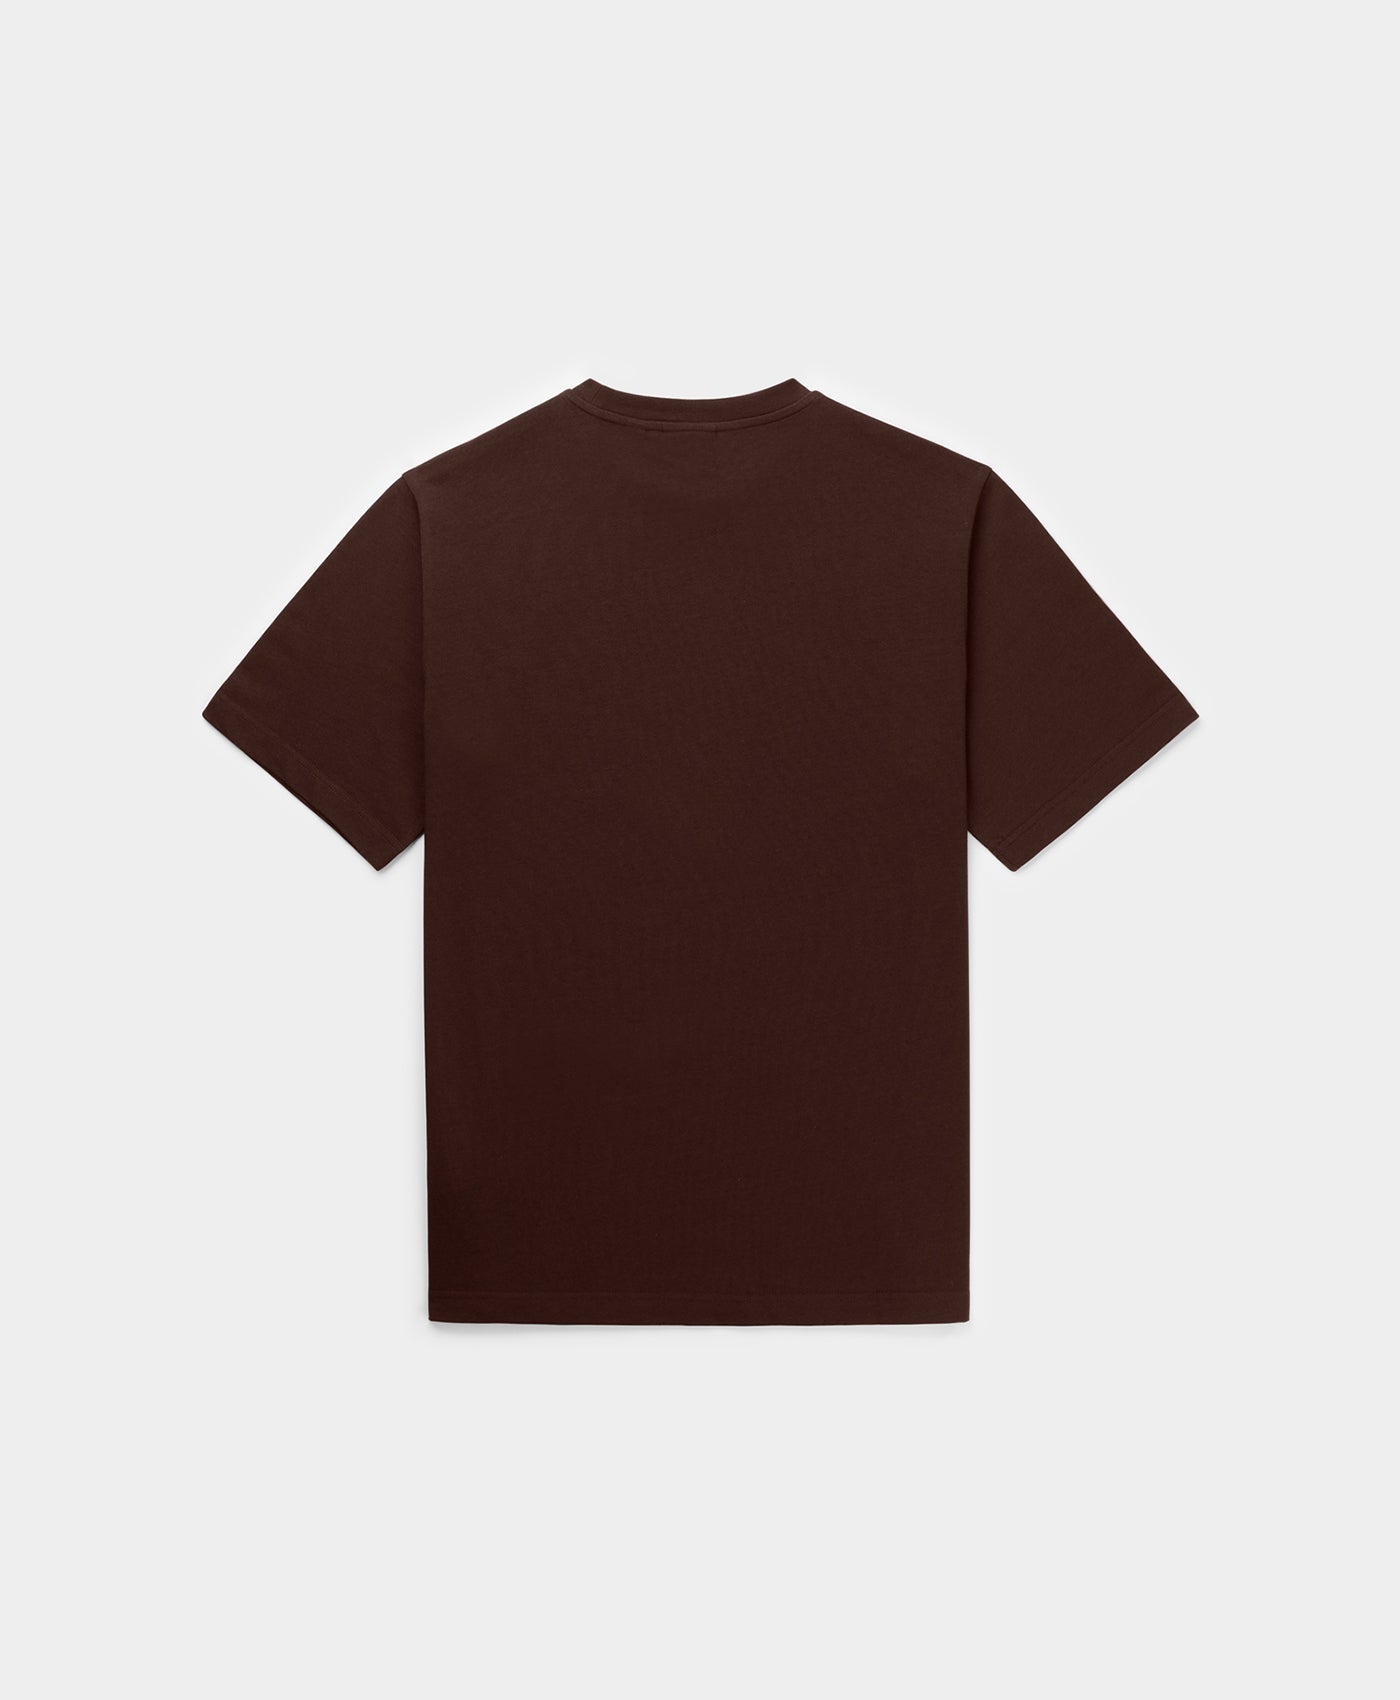 DP - Chocolate Brown Horizo T-Shirt - Packshot - Rear